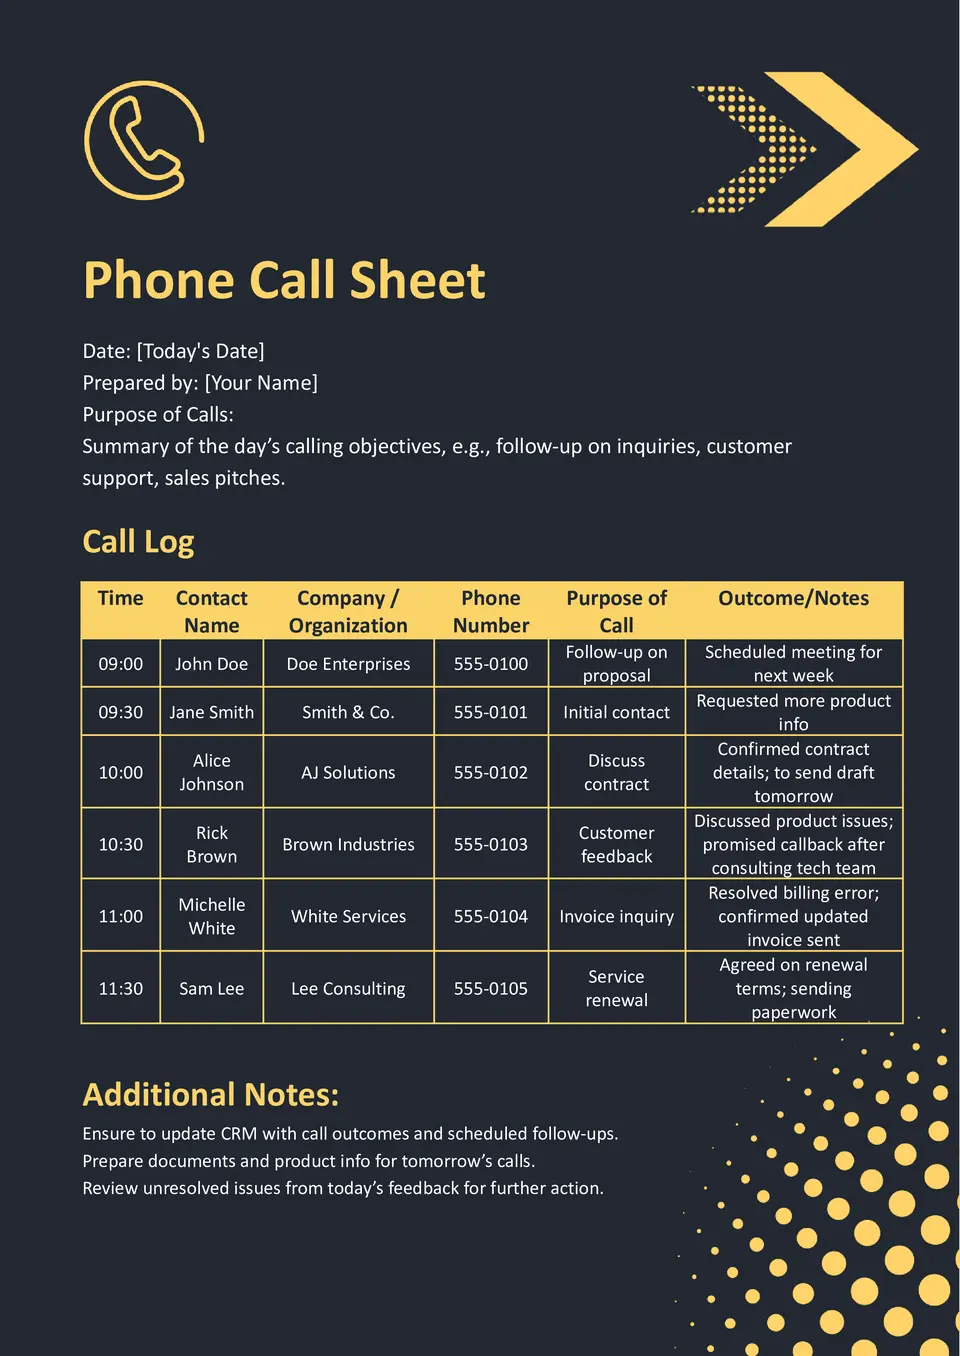 Phone Call Sheet Template